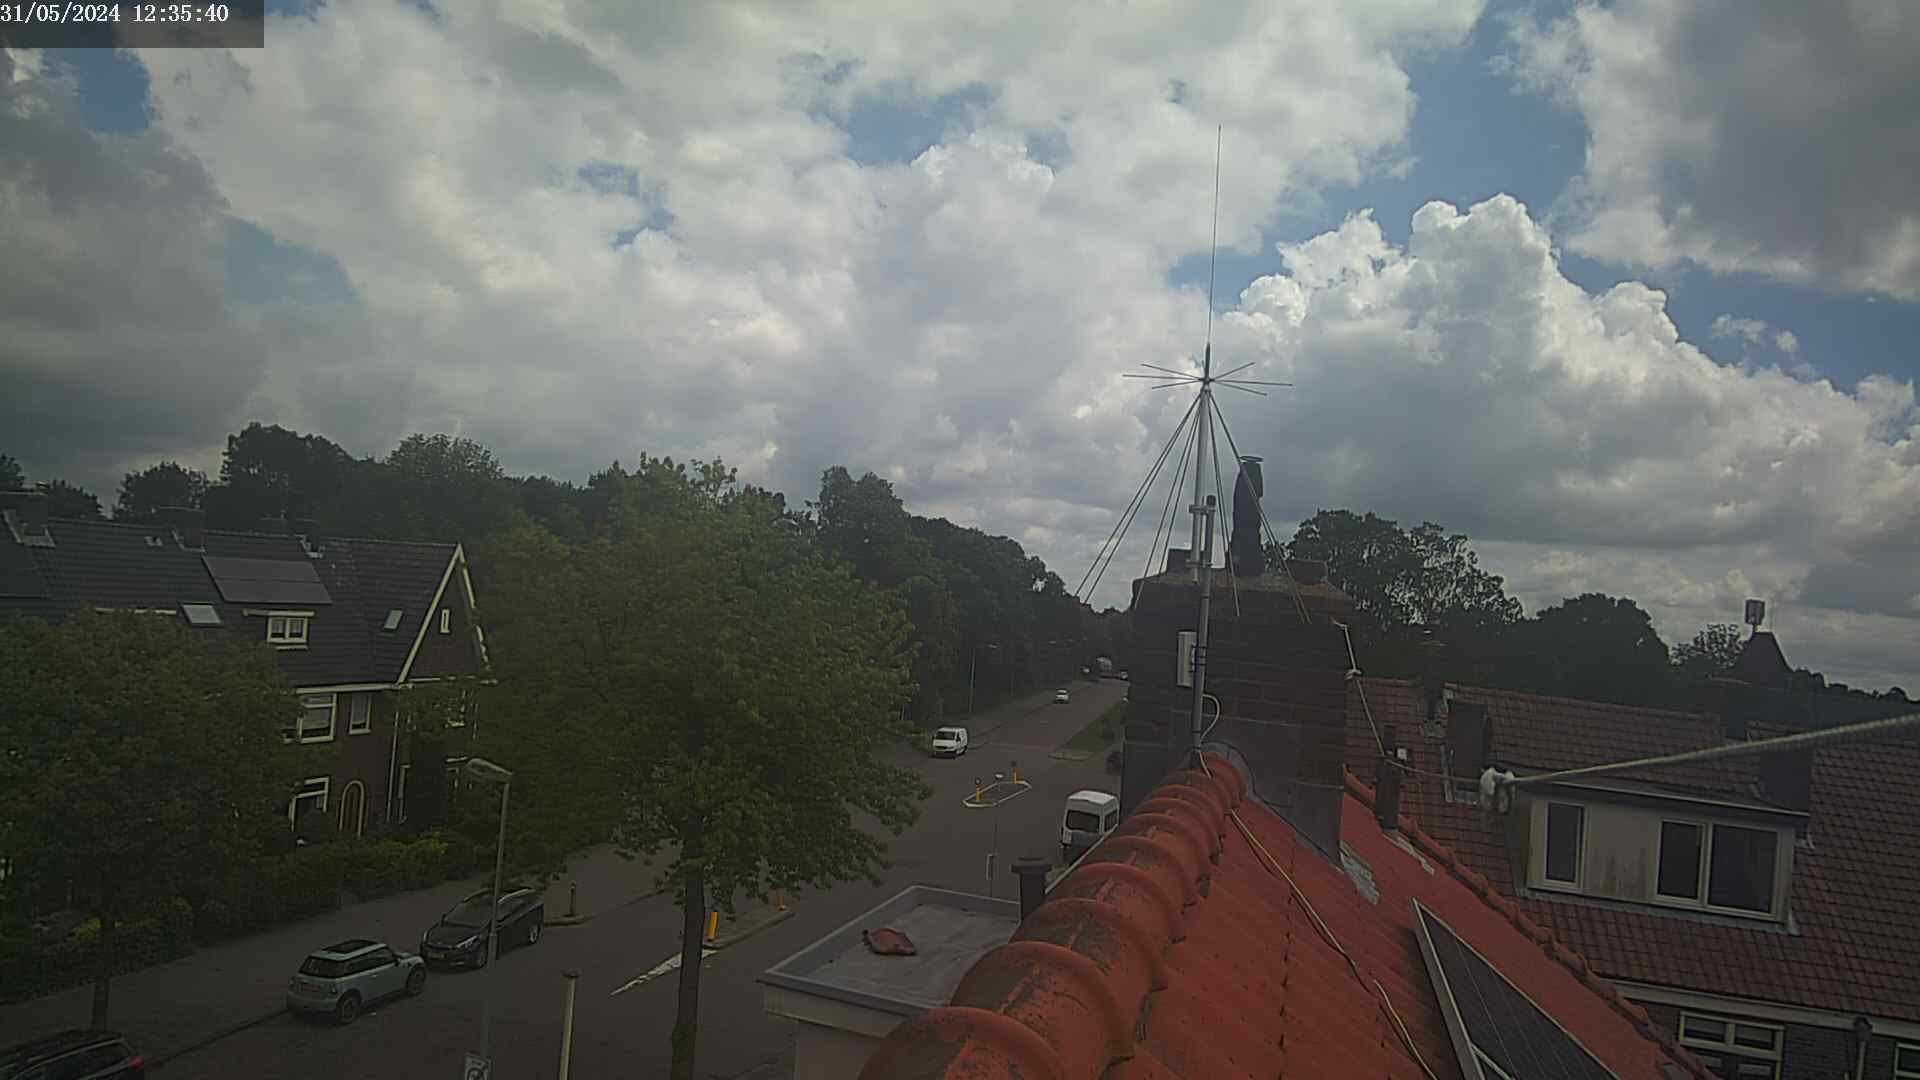 Haarlem Di. 13:35